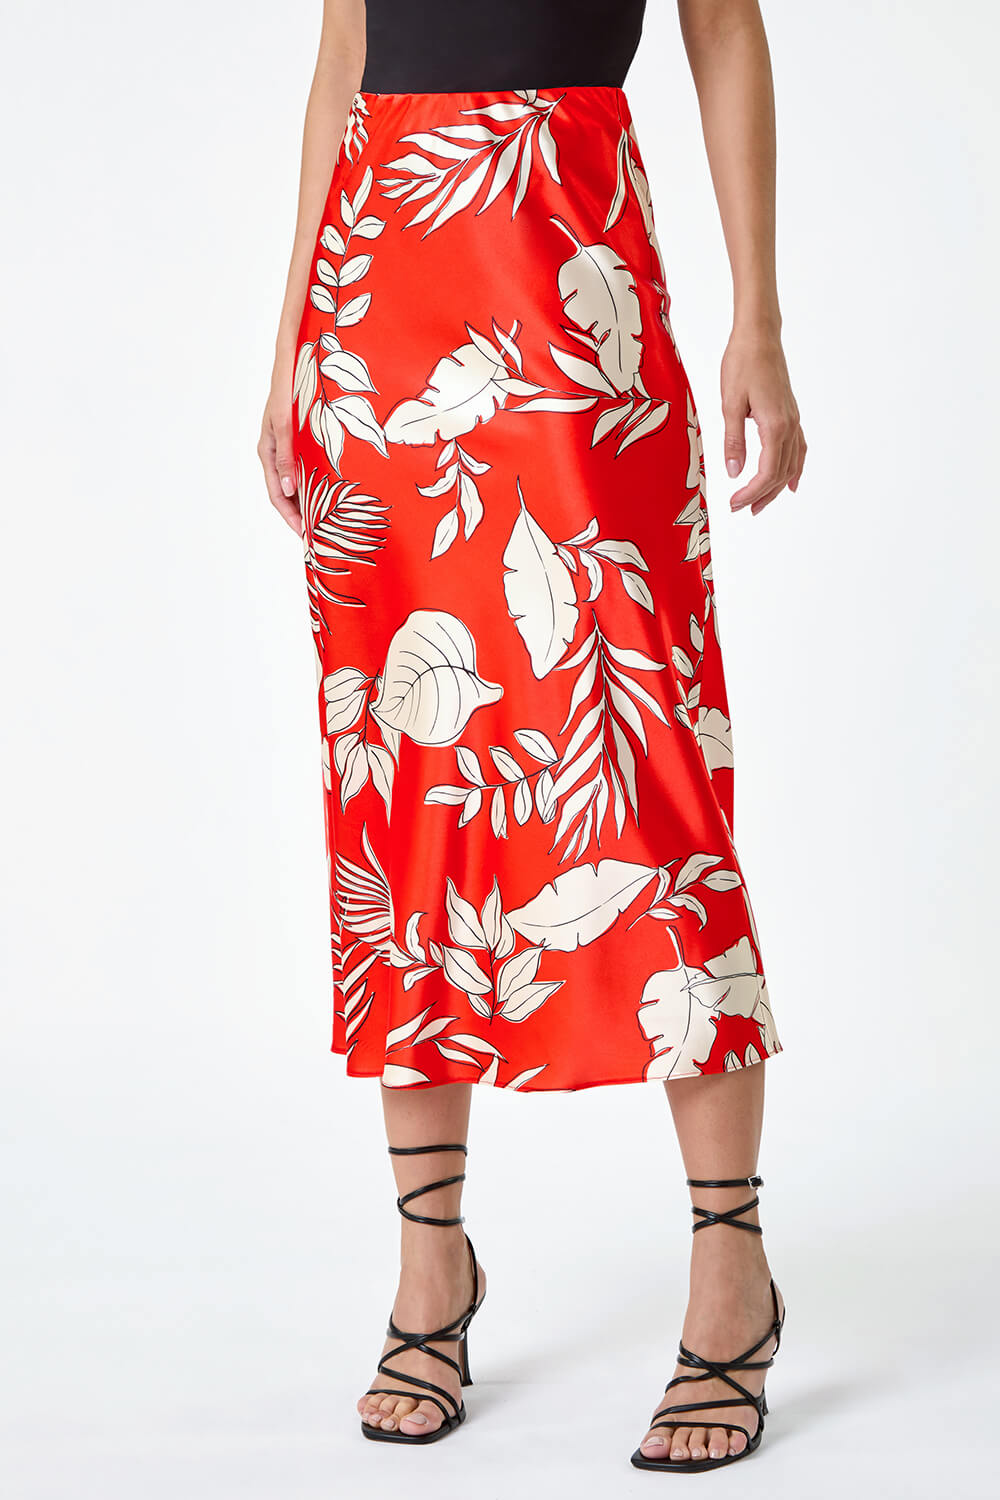 ORANGE Floral Print Satin Midi Skirt, Image 4 of 5